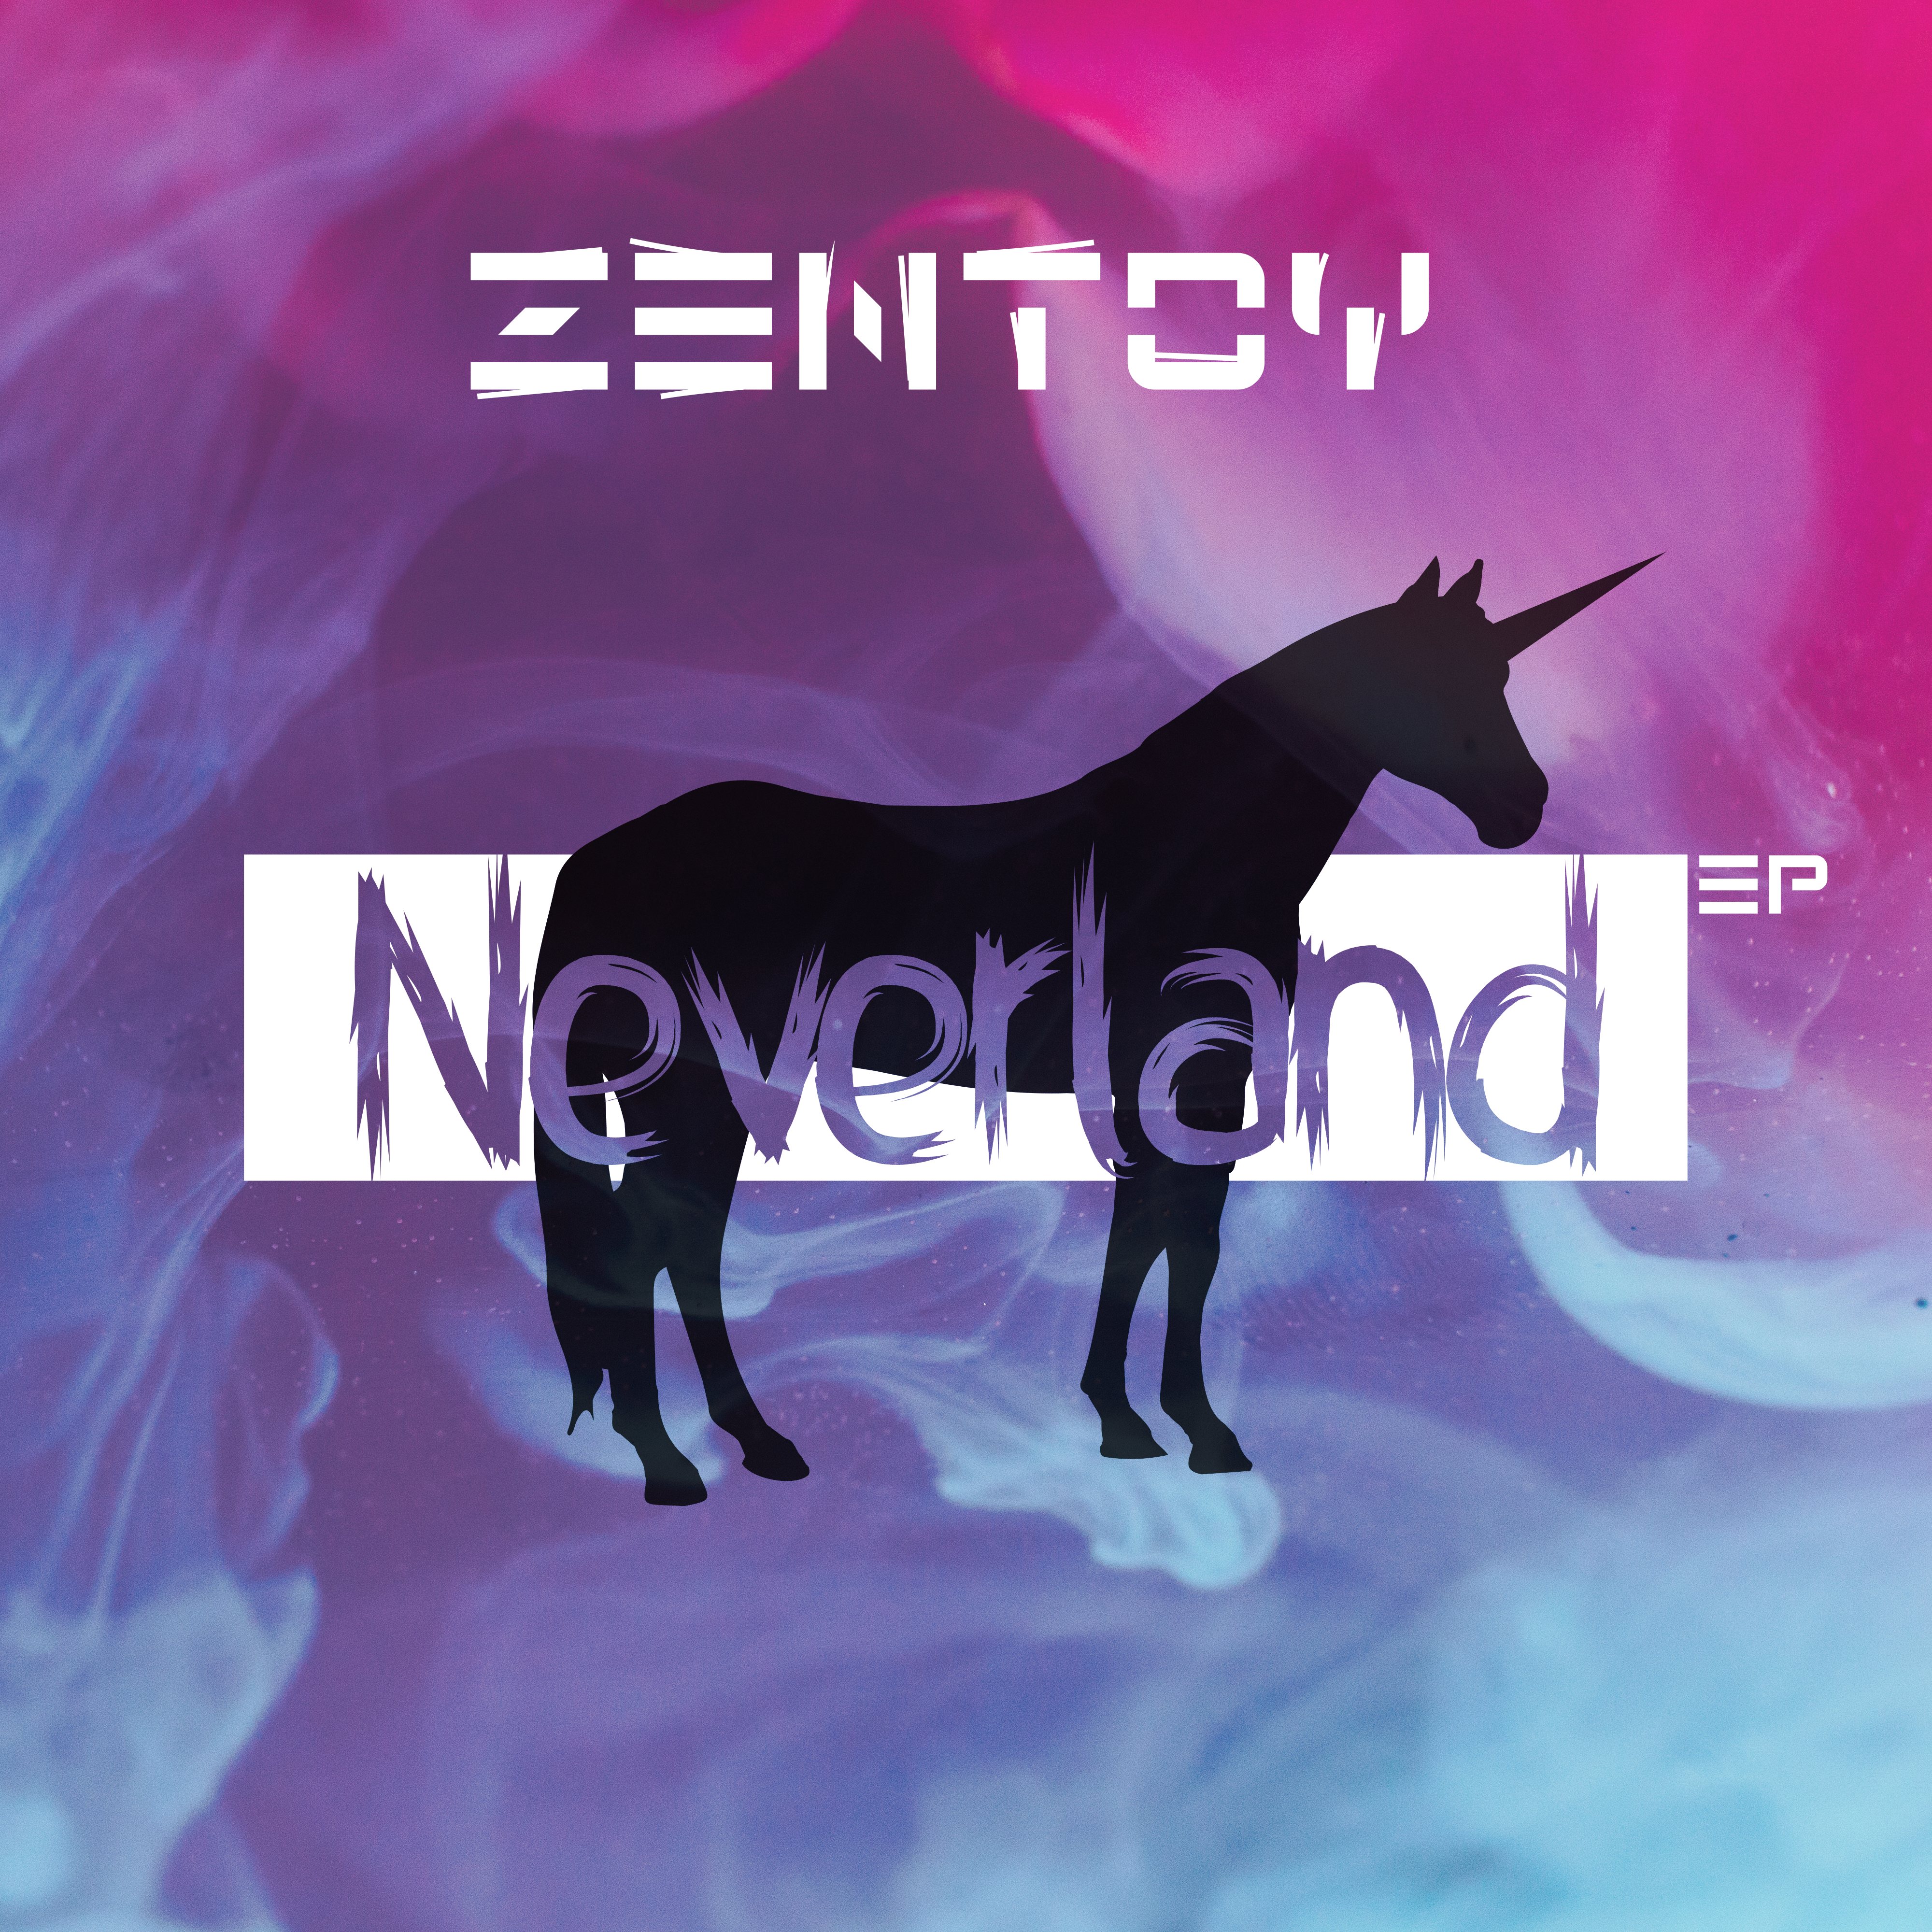 ZenToy - Neverland